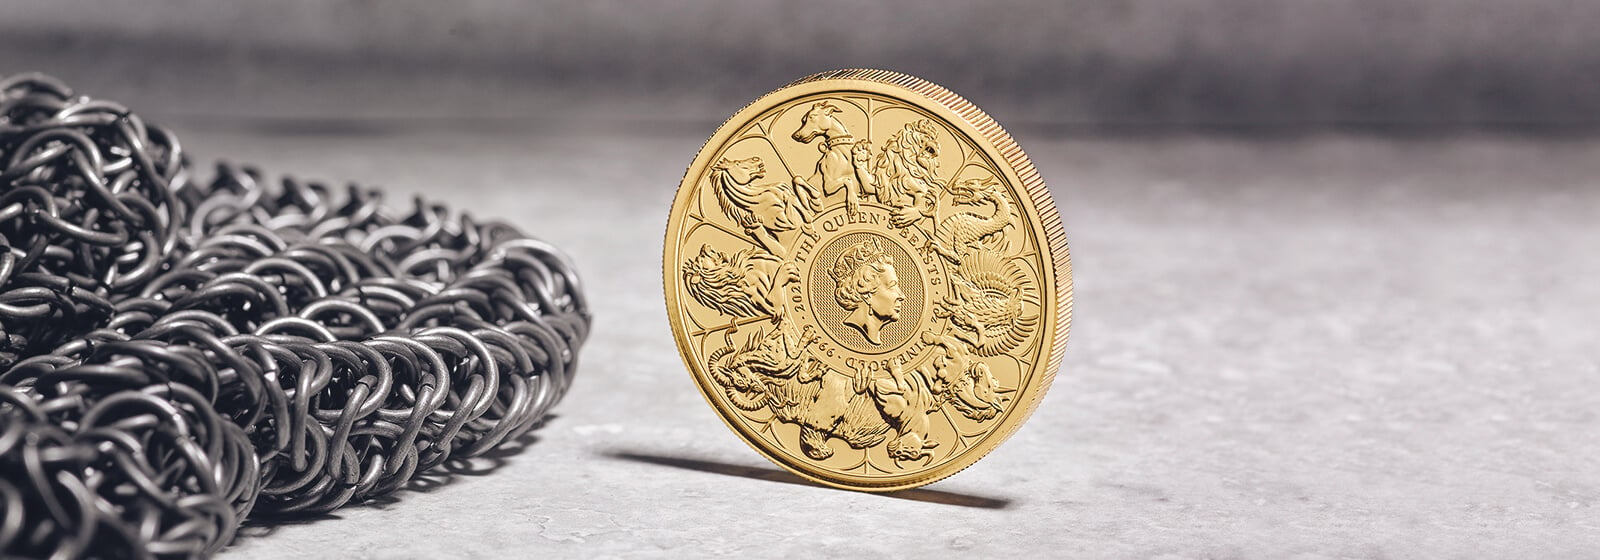 the queen's beasts completer coin bullion range